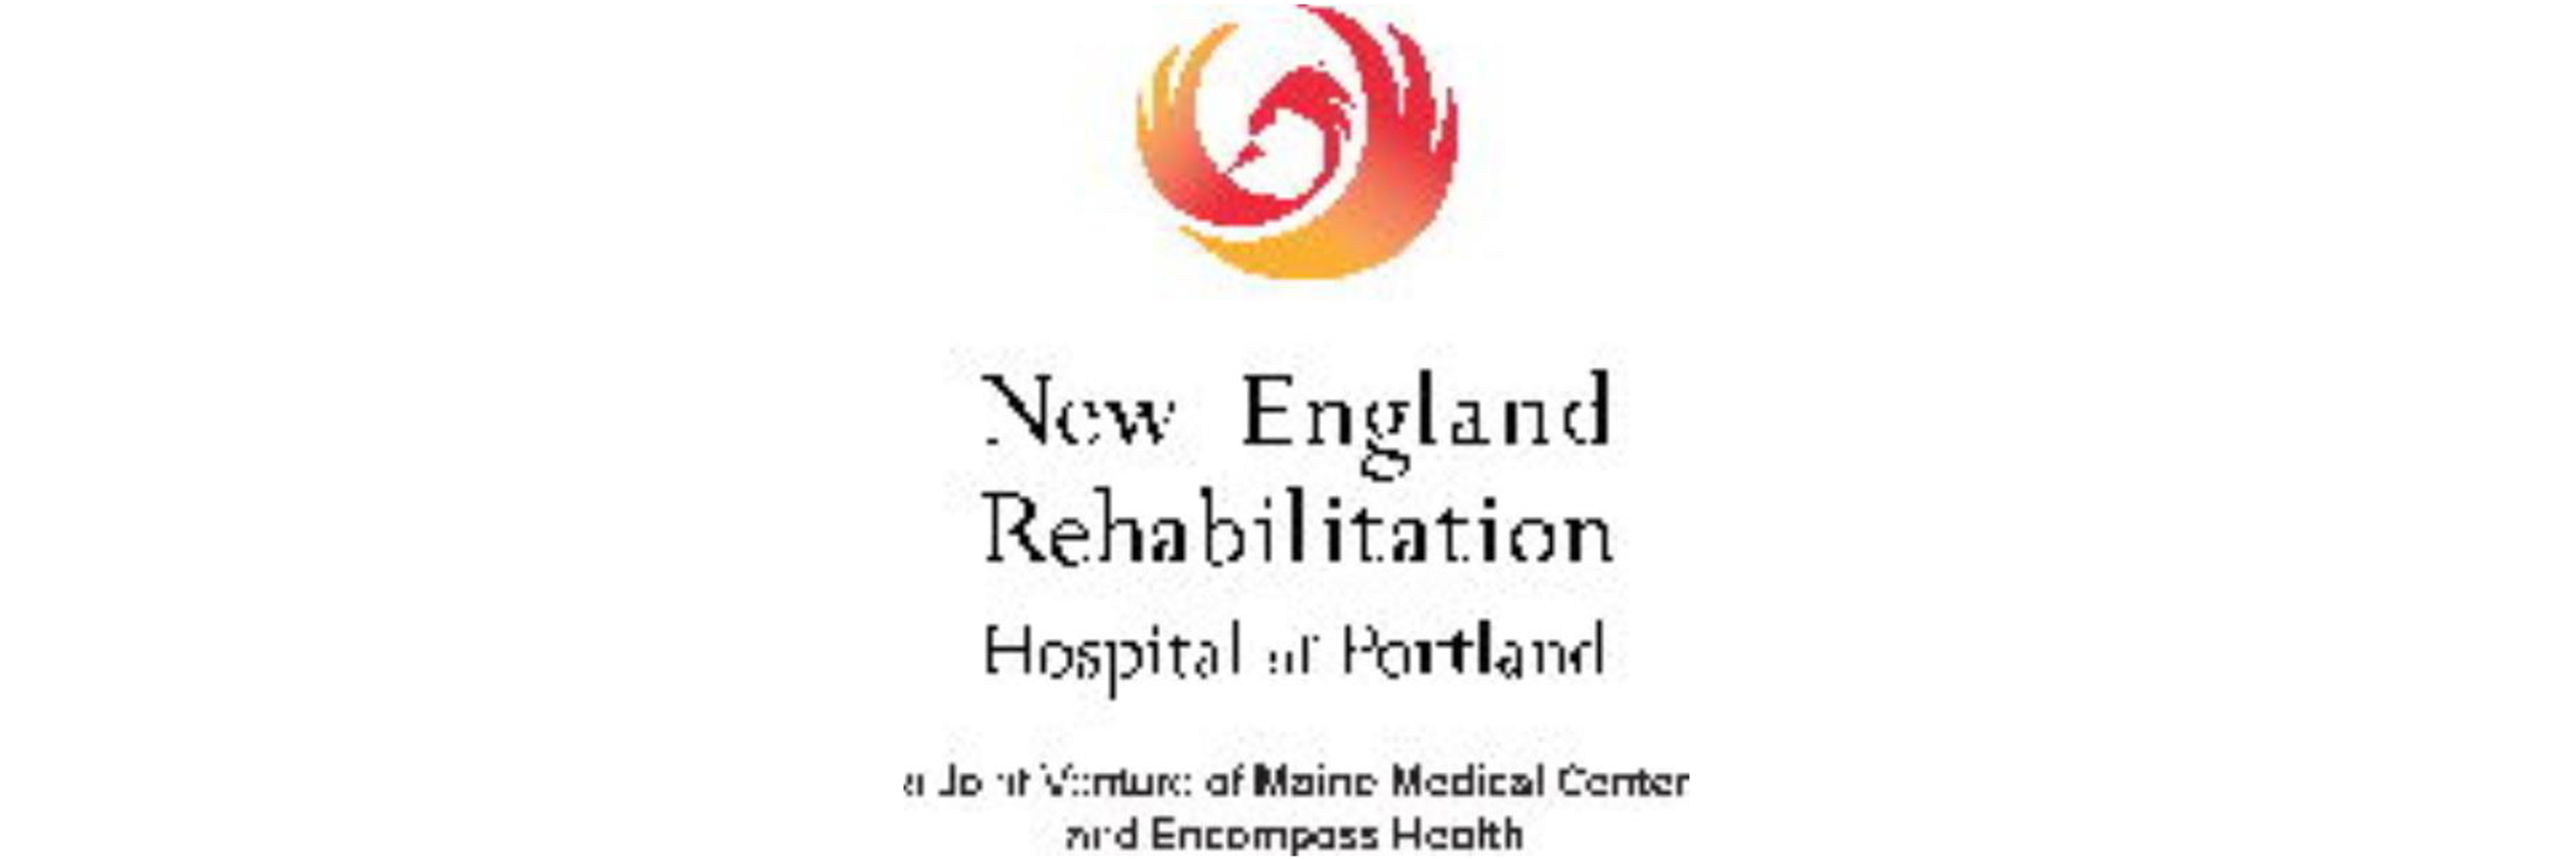 New England Rehabilitation Hospital